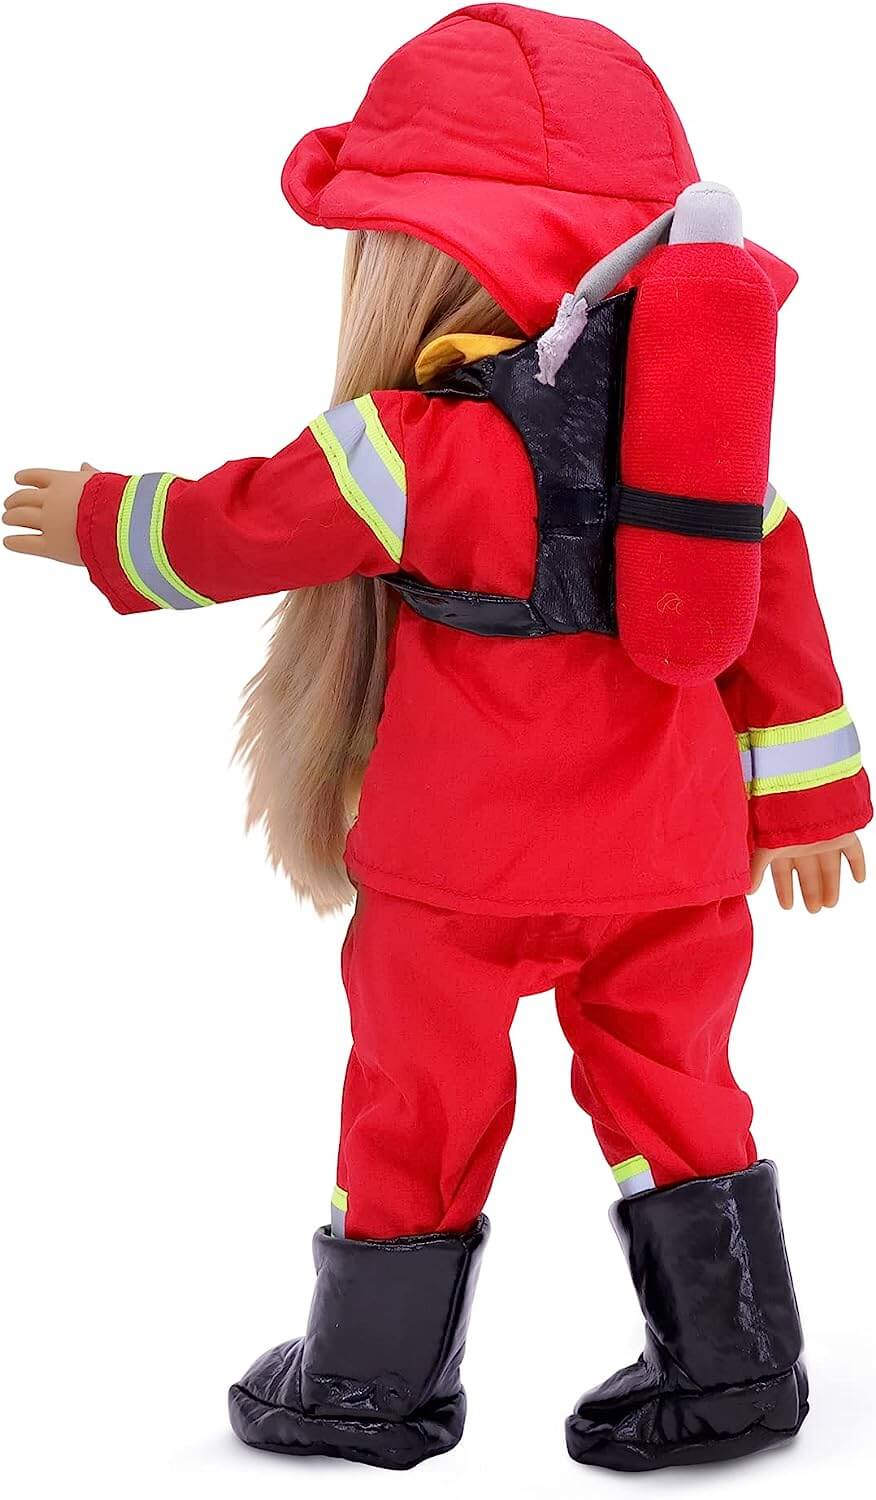 Firefighter Costume For 18in Dolls